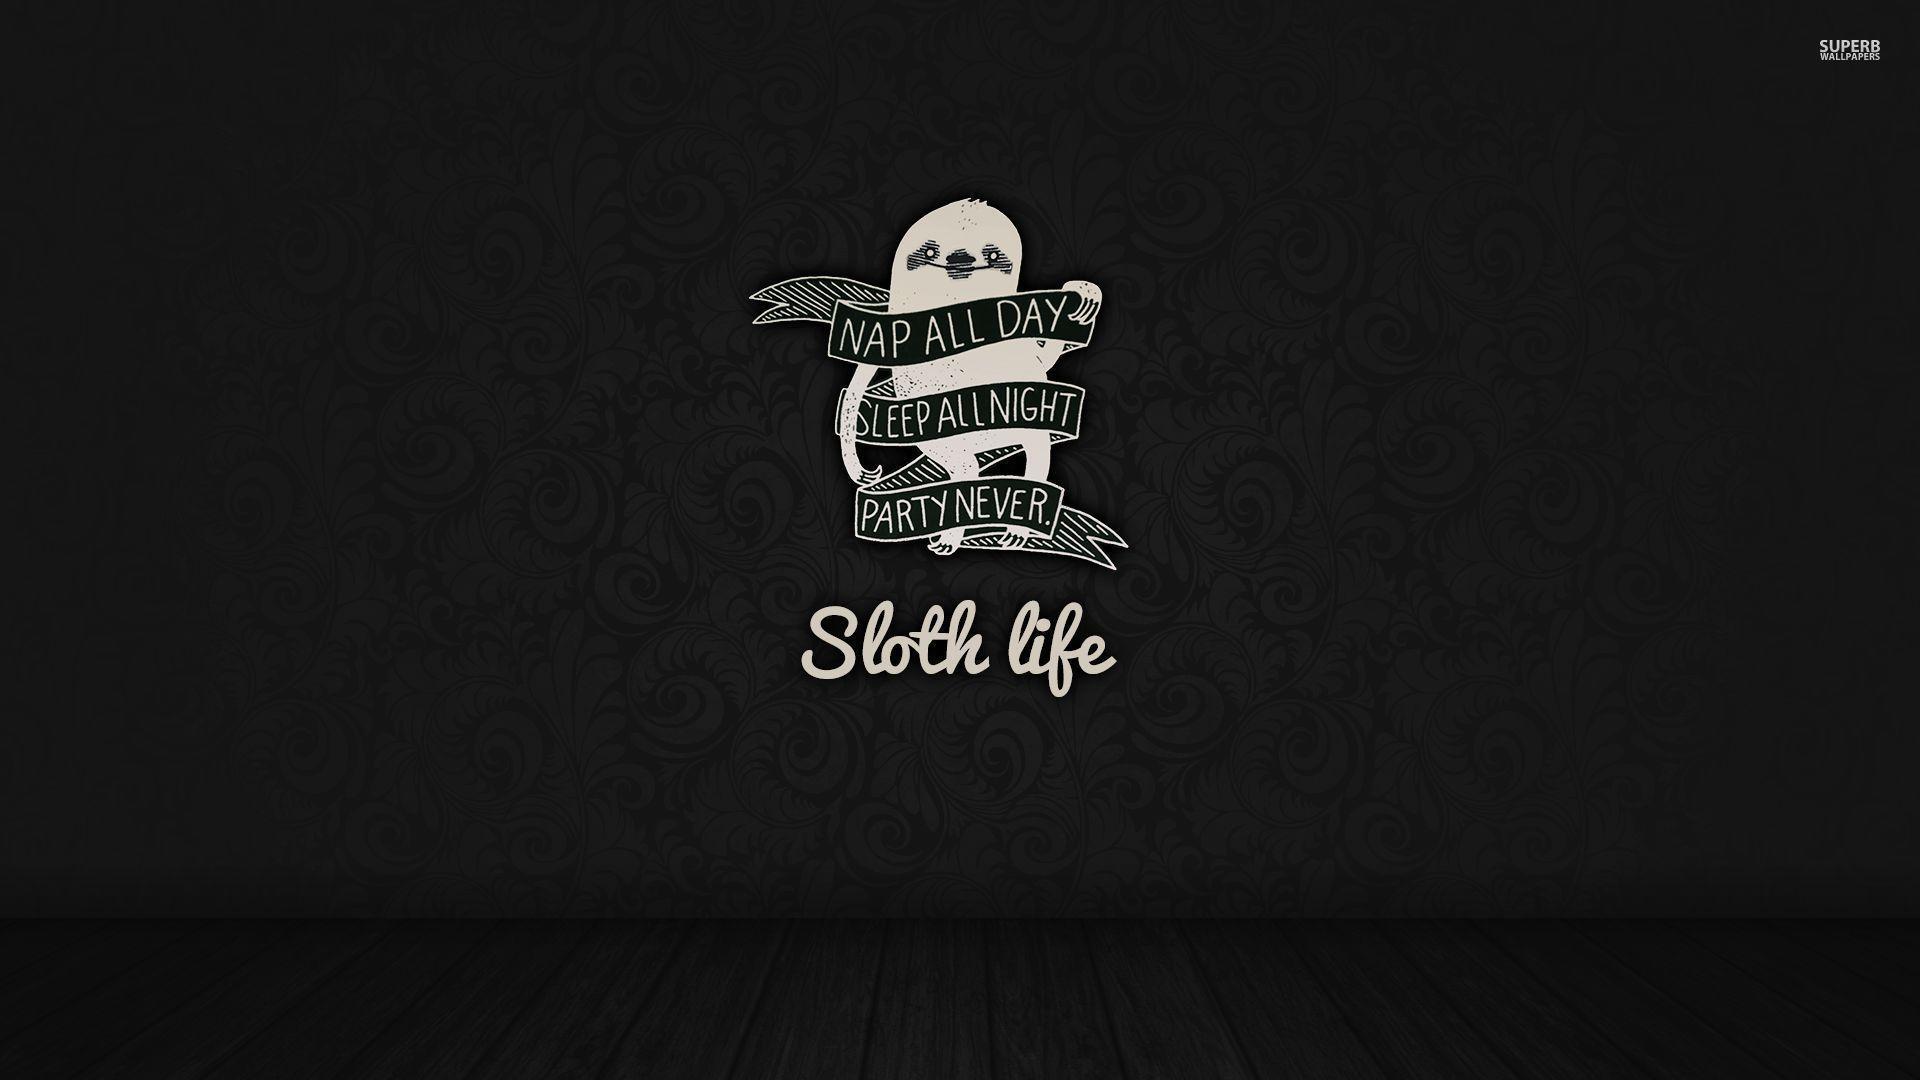 Sloth life wallpaper wallpaper - #